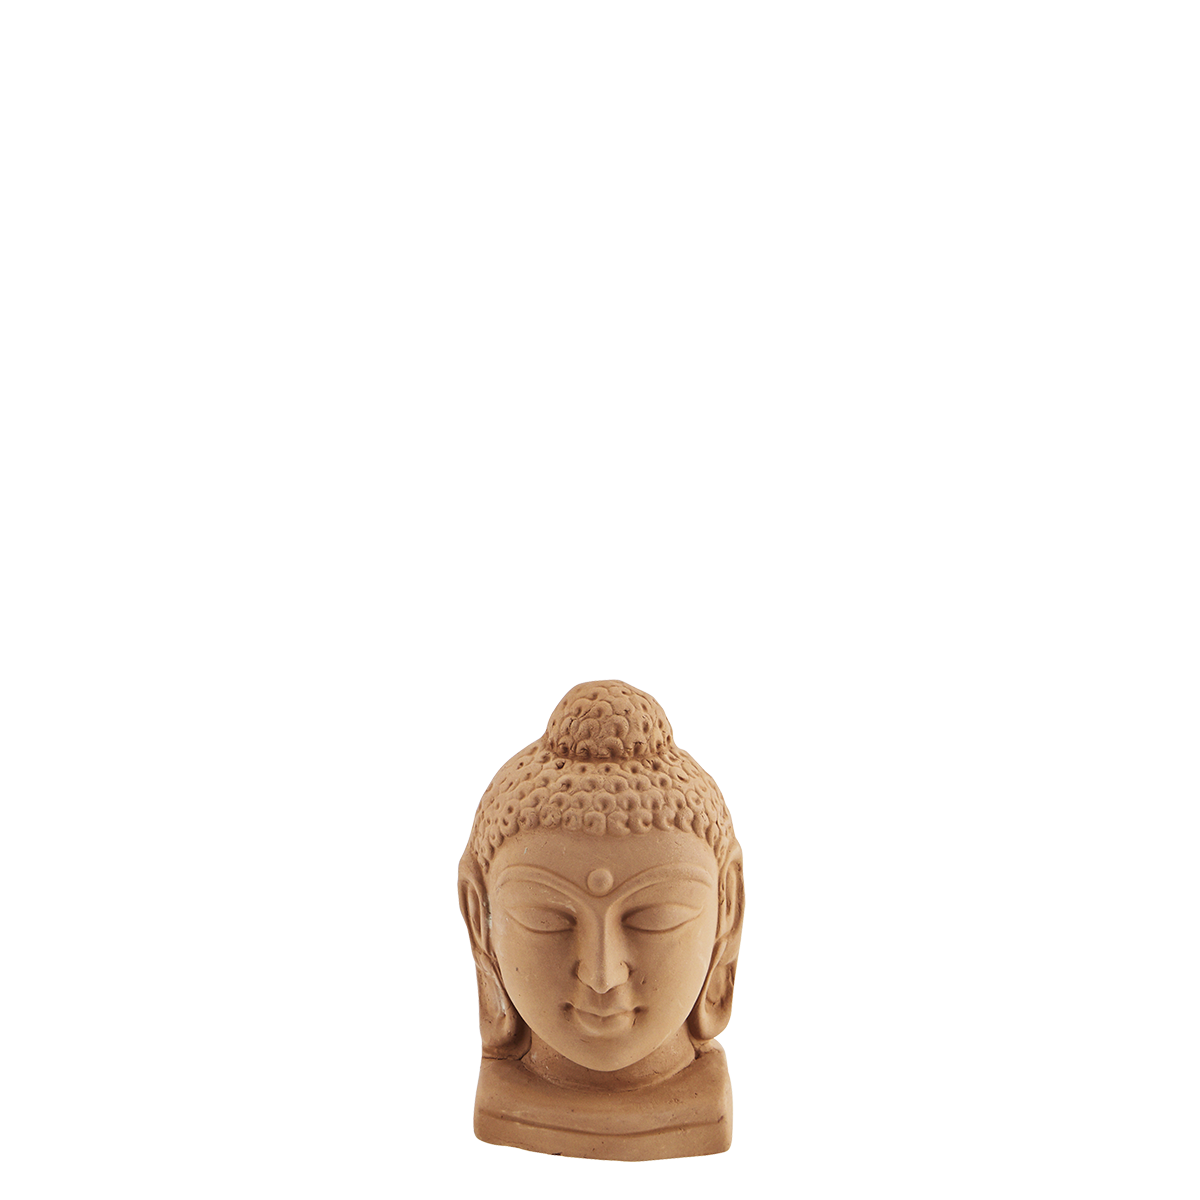 Earthenware Budha